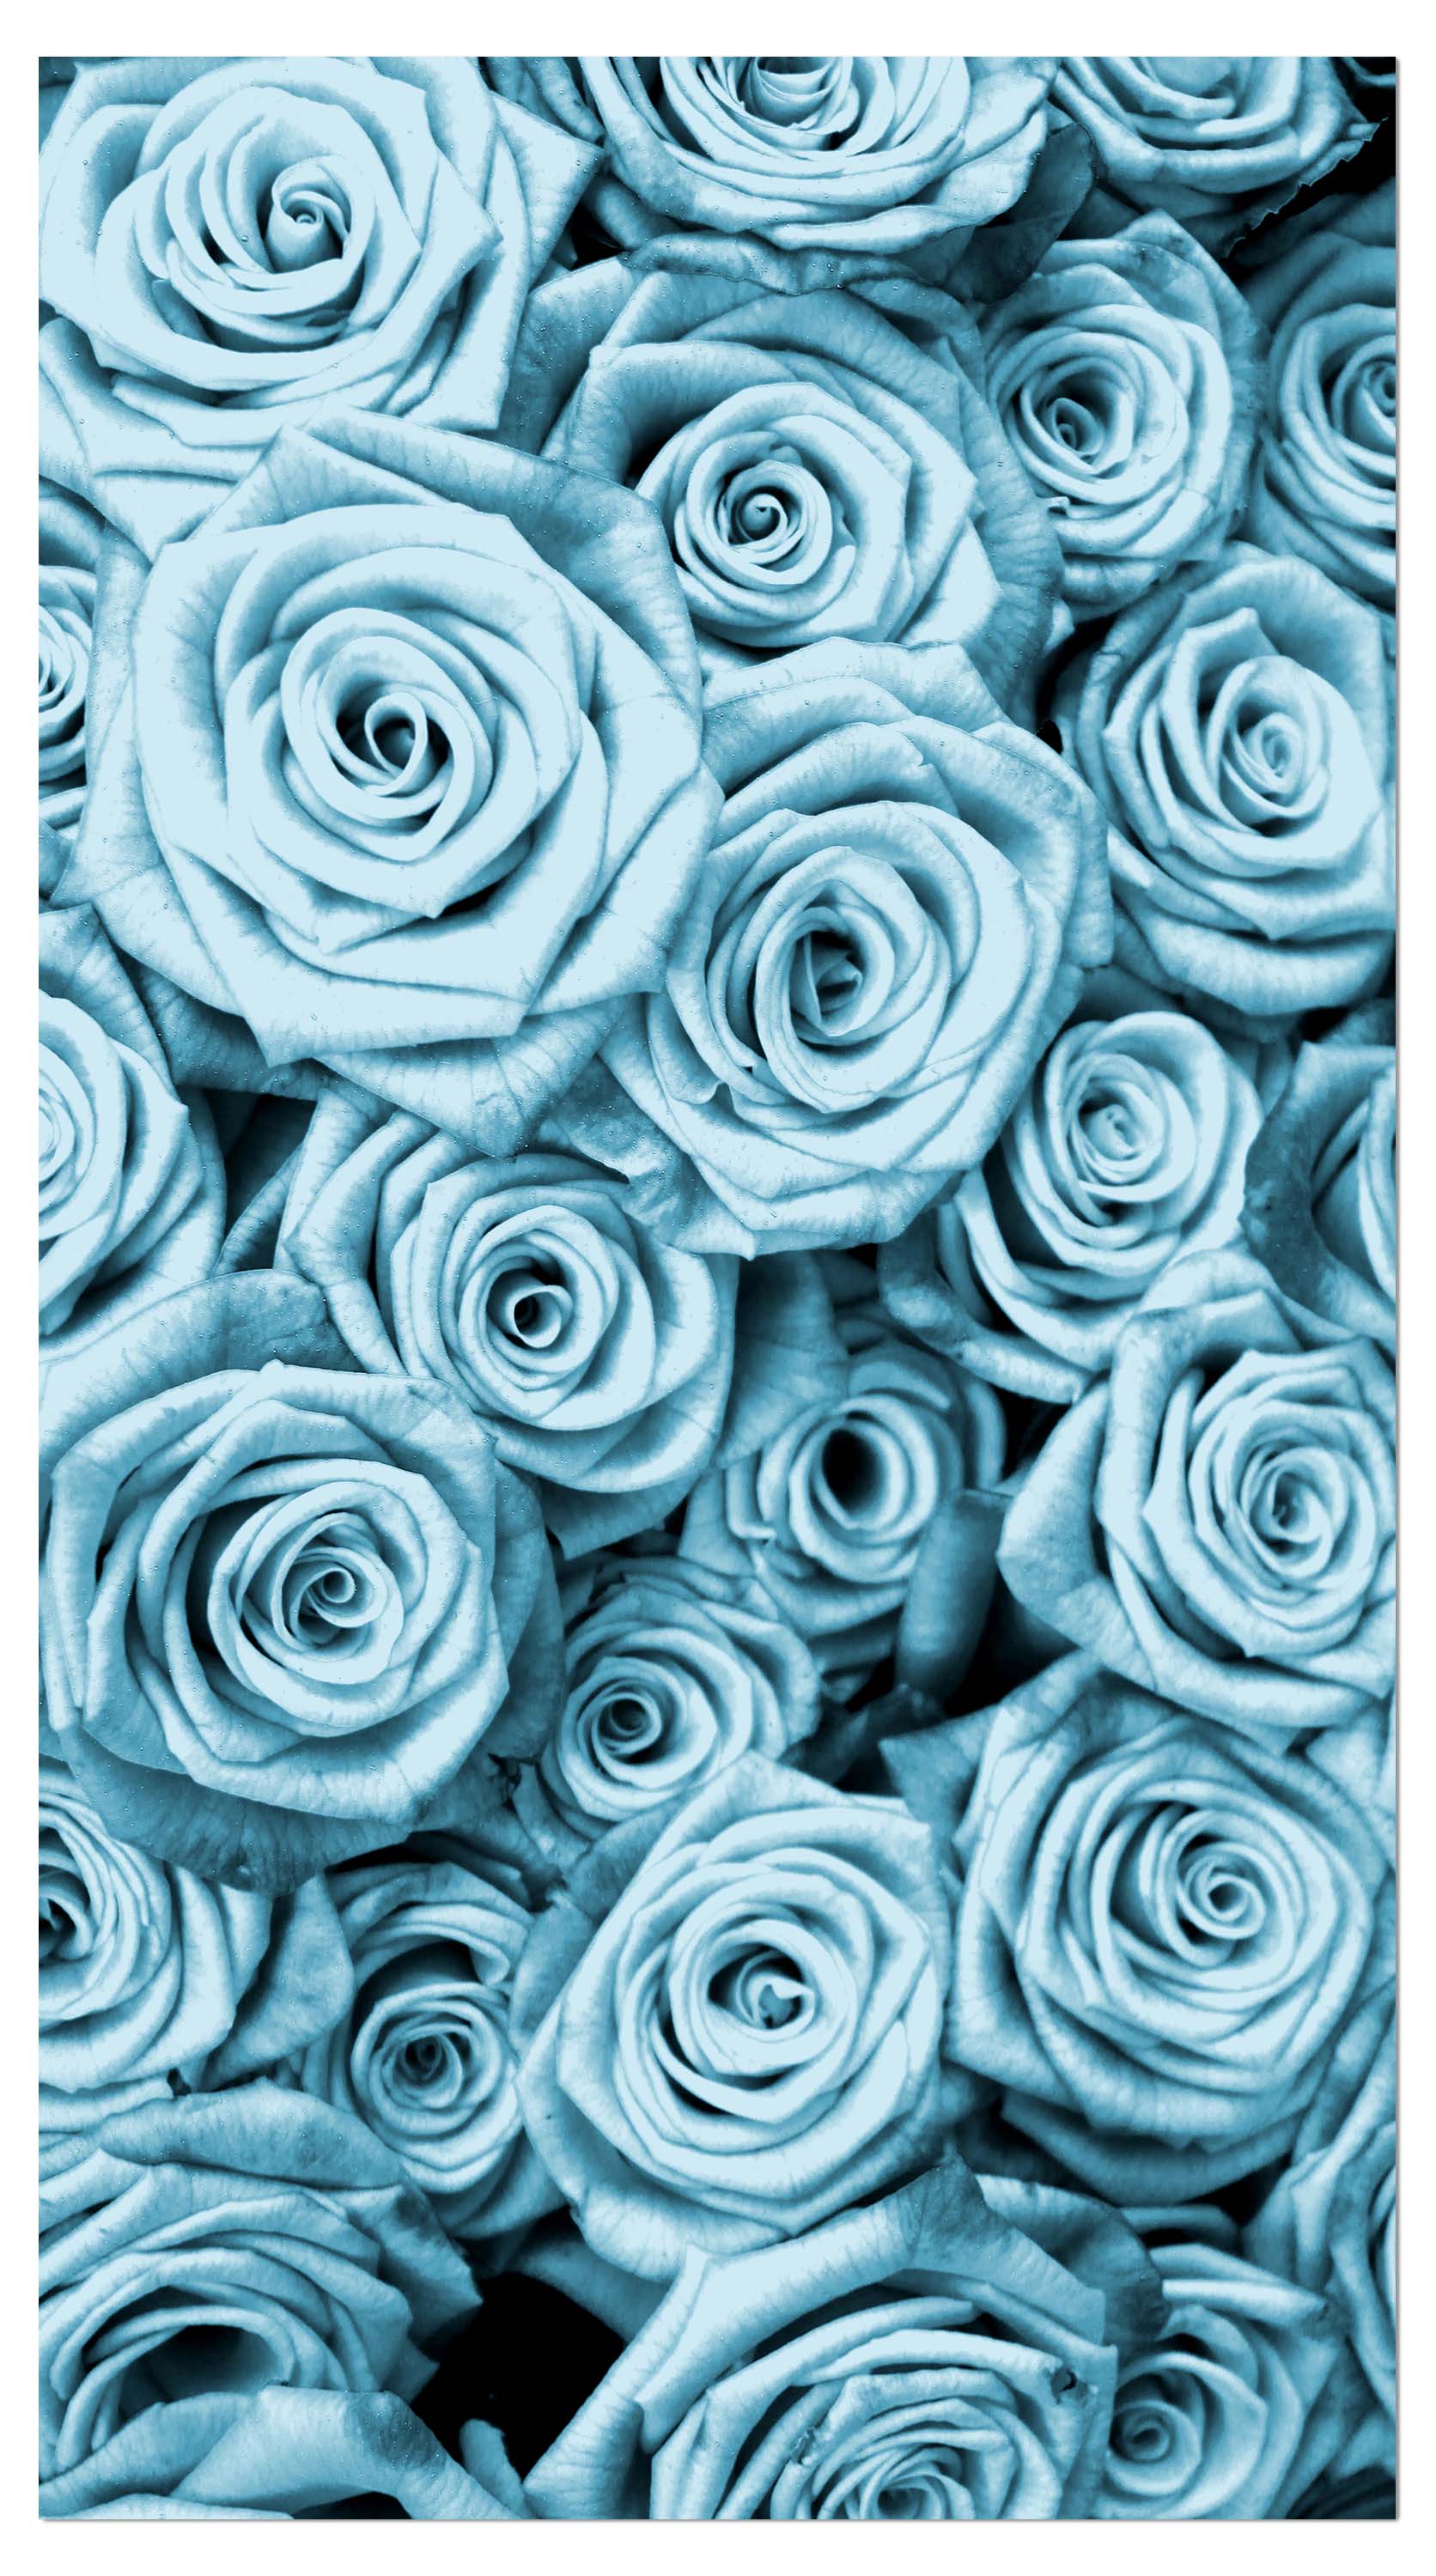 Garderobe Blaues Rosenfeld Blüte M0228 entdecken - Bild 4